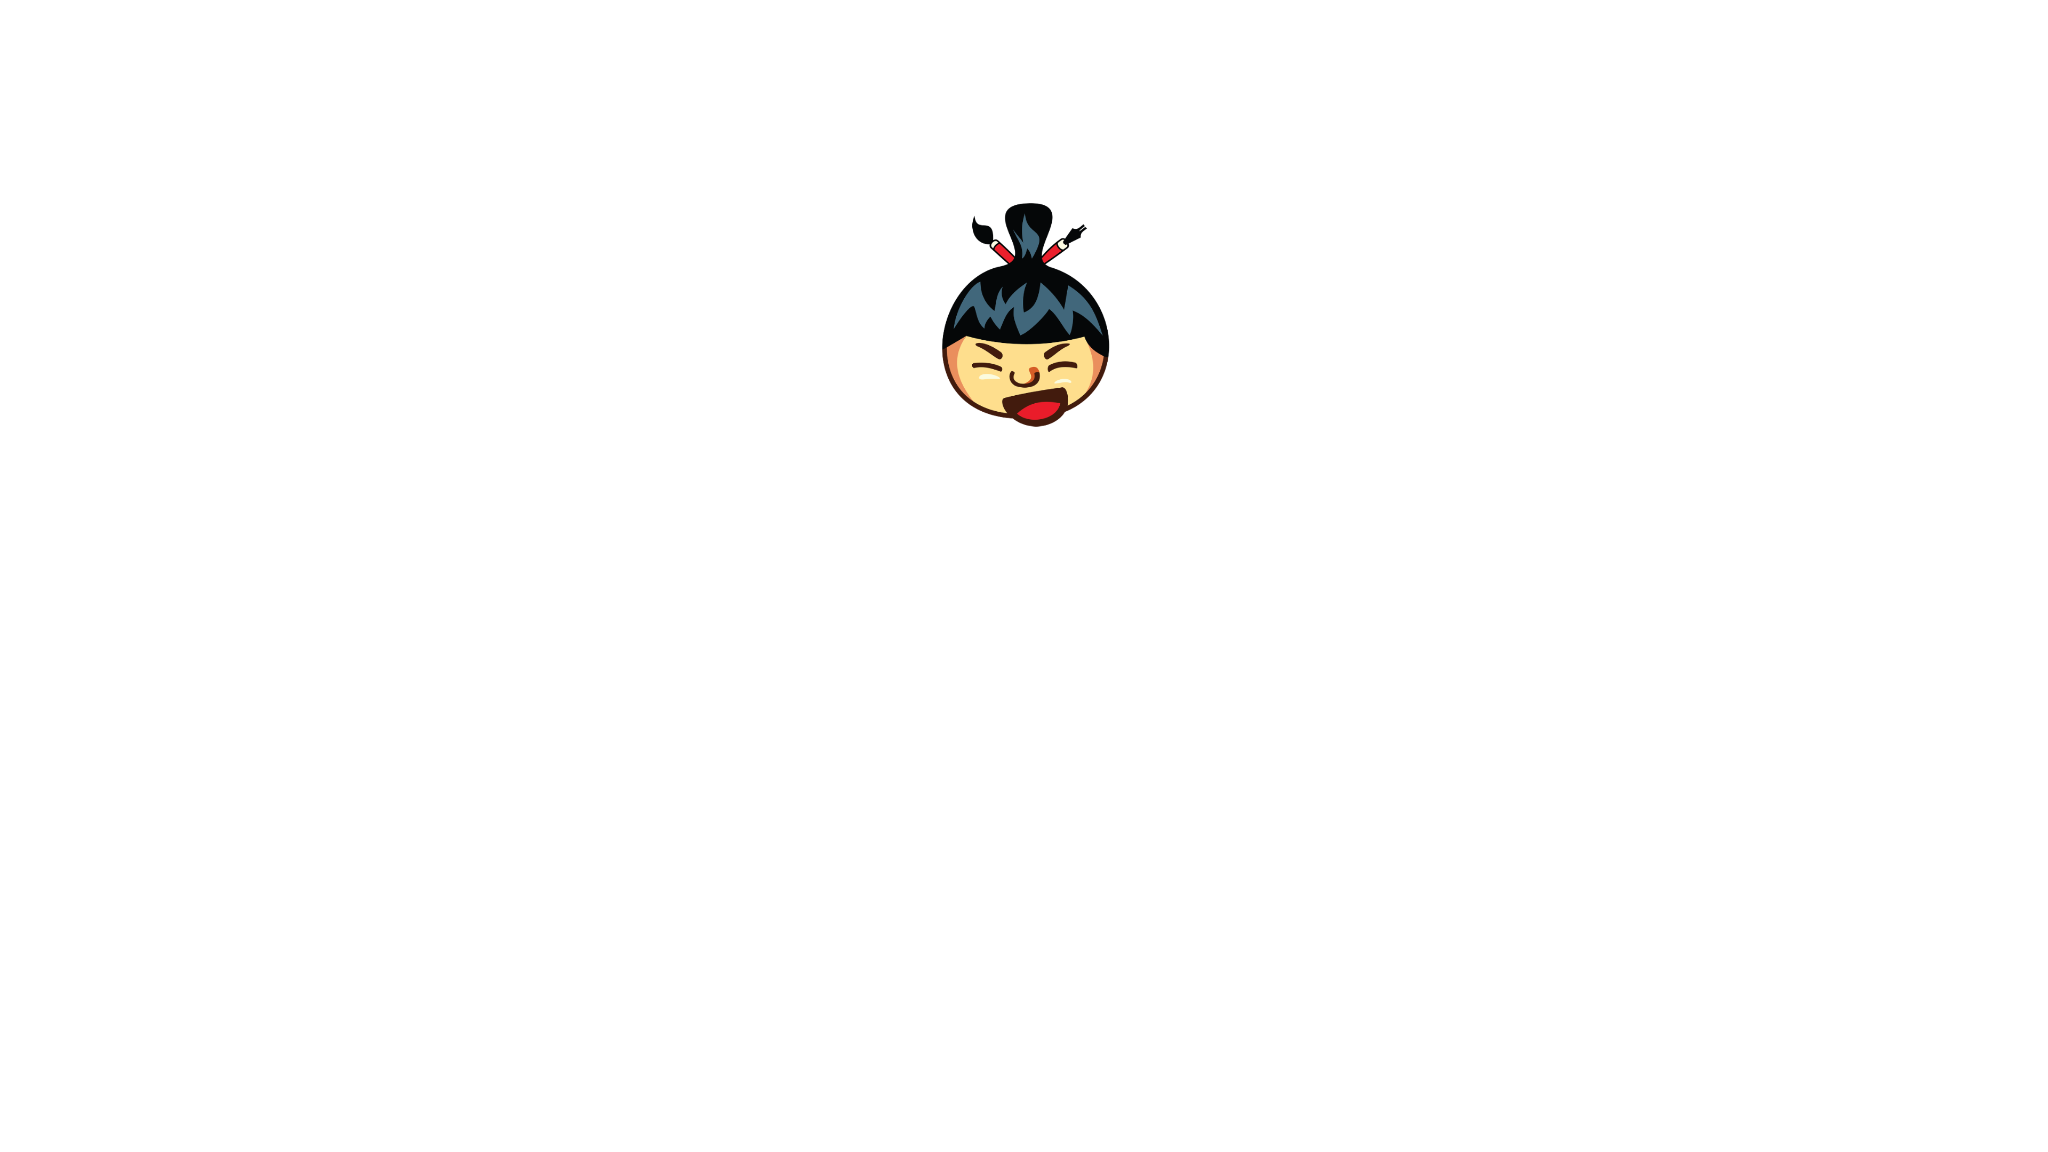 Sumo Video Intro - criado por Lauri Koutaniemi com paint